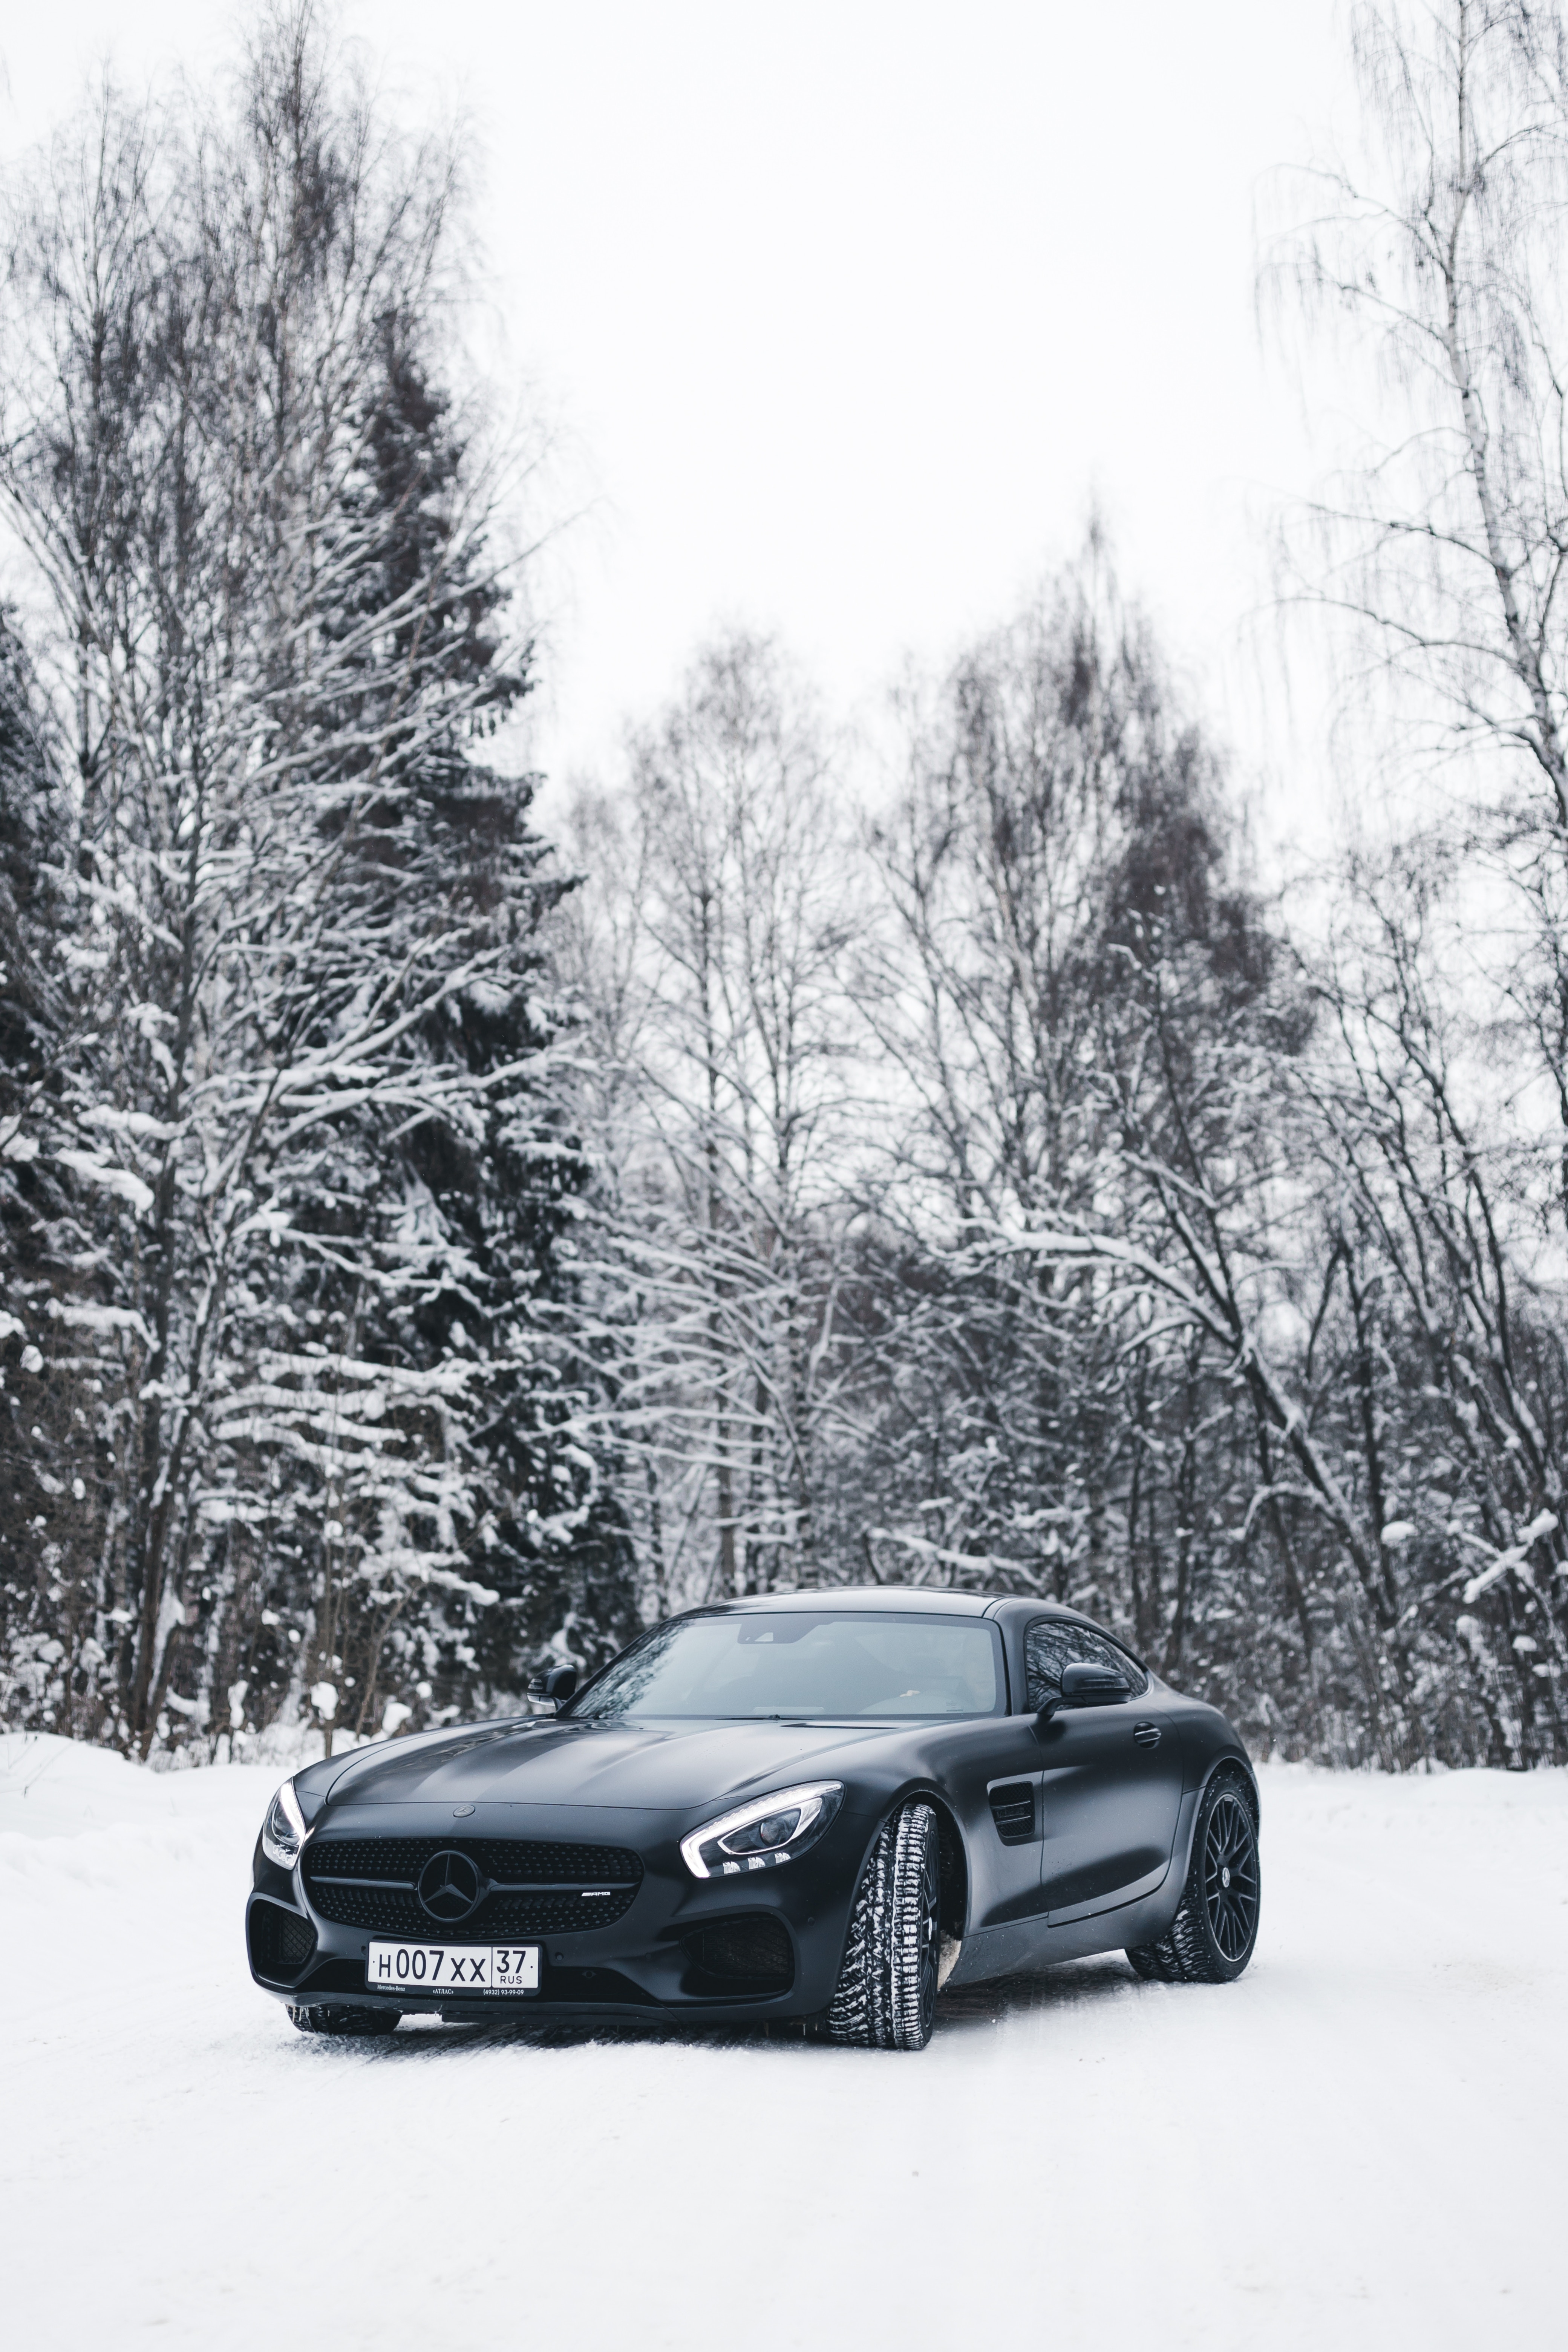 cars, mercedes-benz, forest, snow, black, mercedes mobile wallpaper